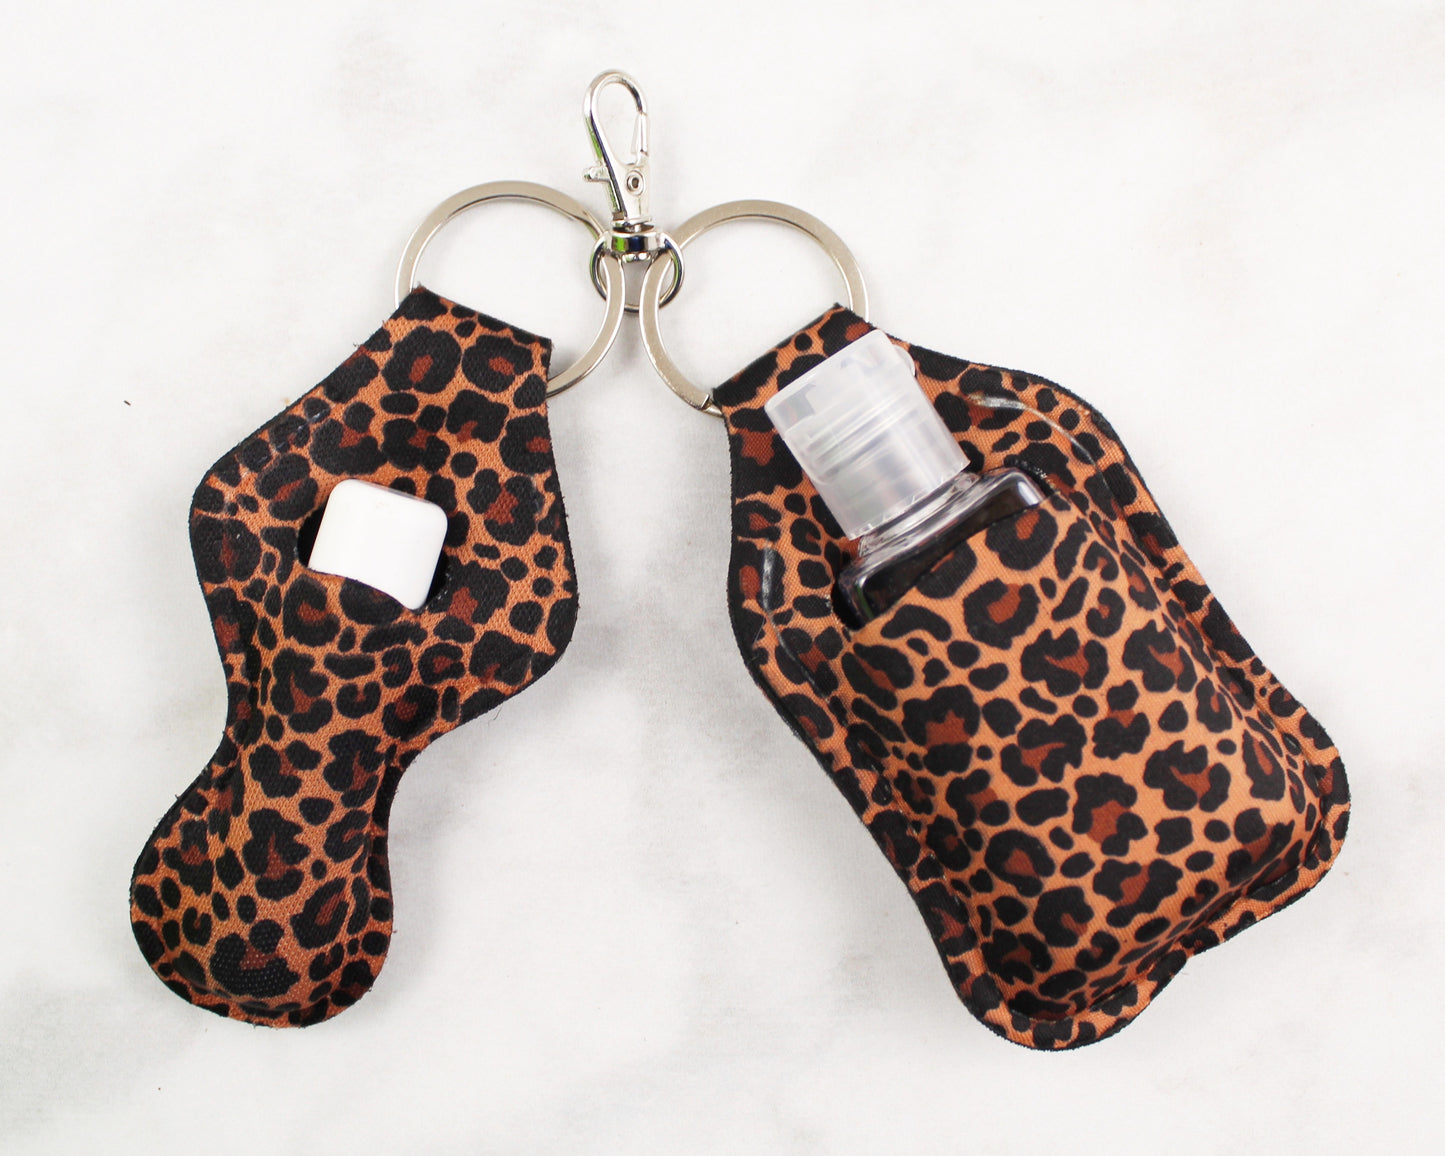 Cheetah Hand Sanitizer and Lip Balm Holders